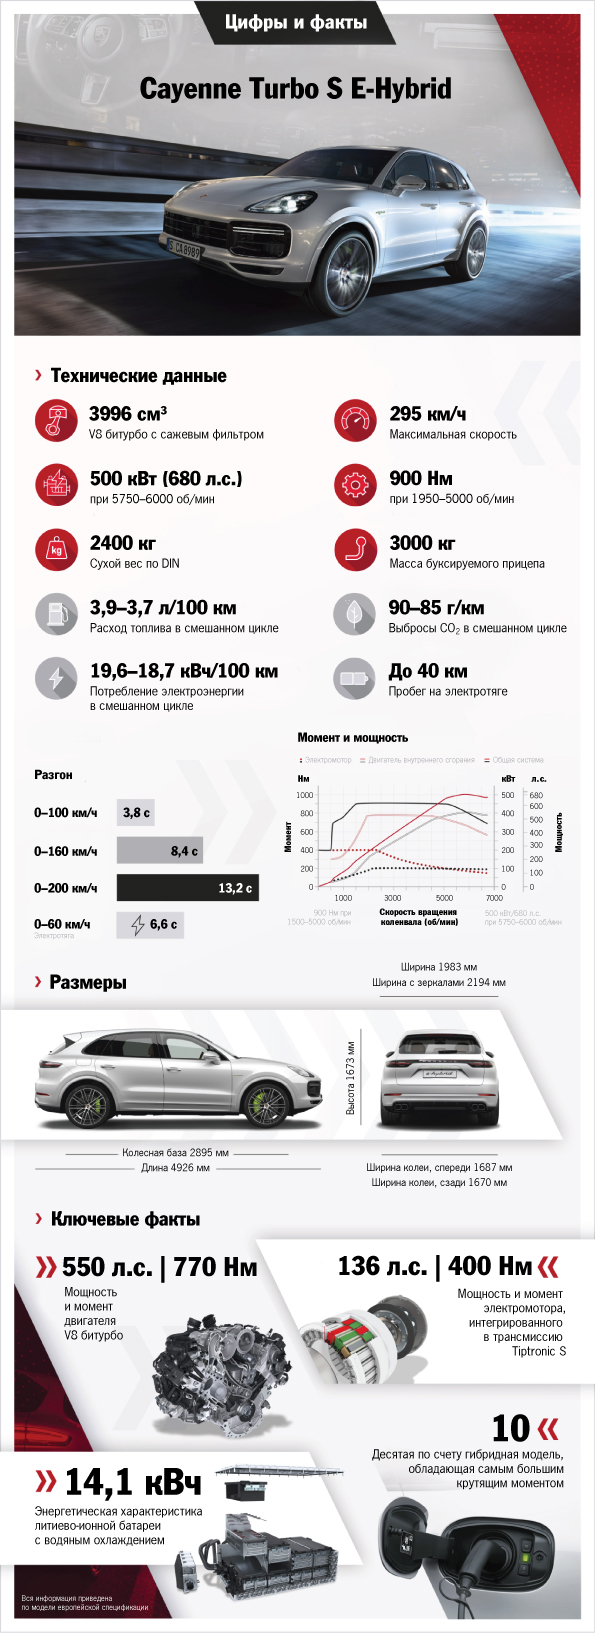 Cayenne Turbo S E-Hybrid, Инфографика, 2019, Porsche AG